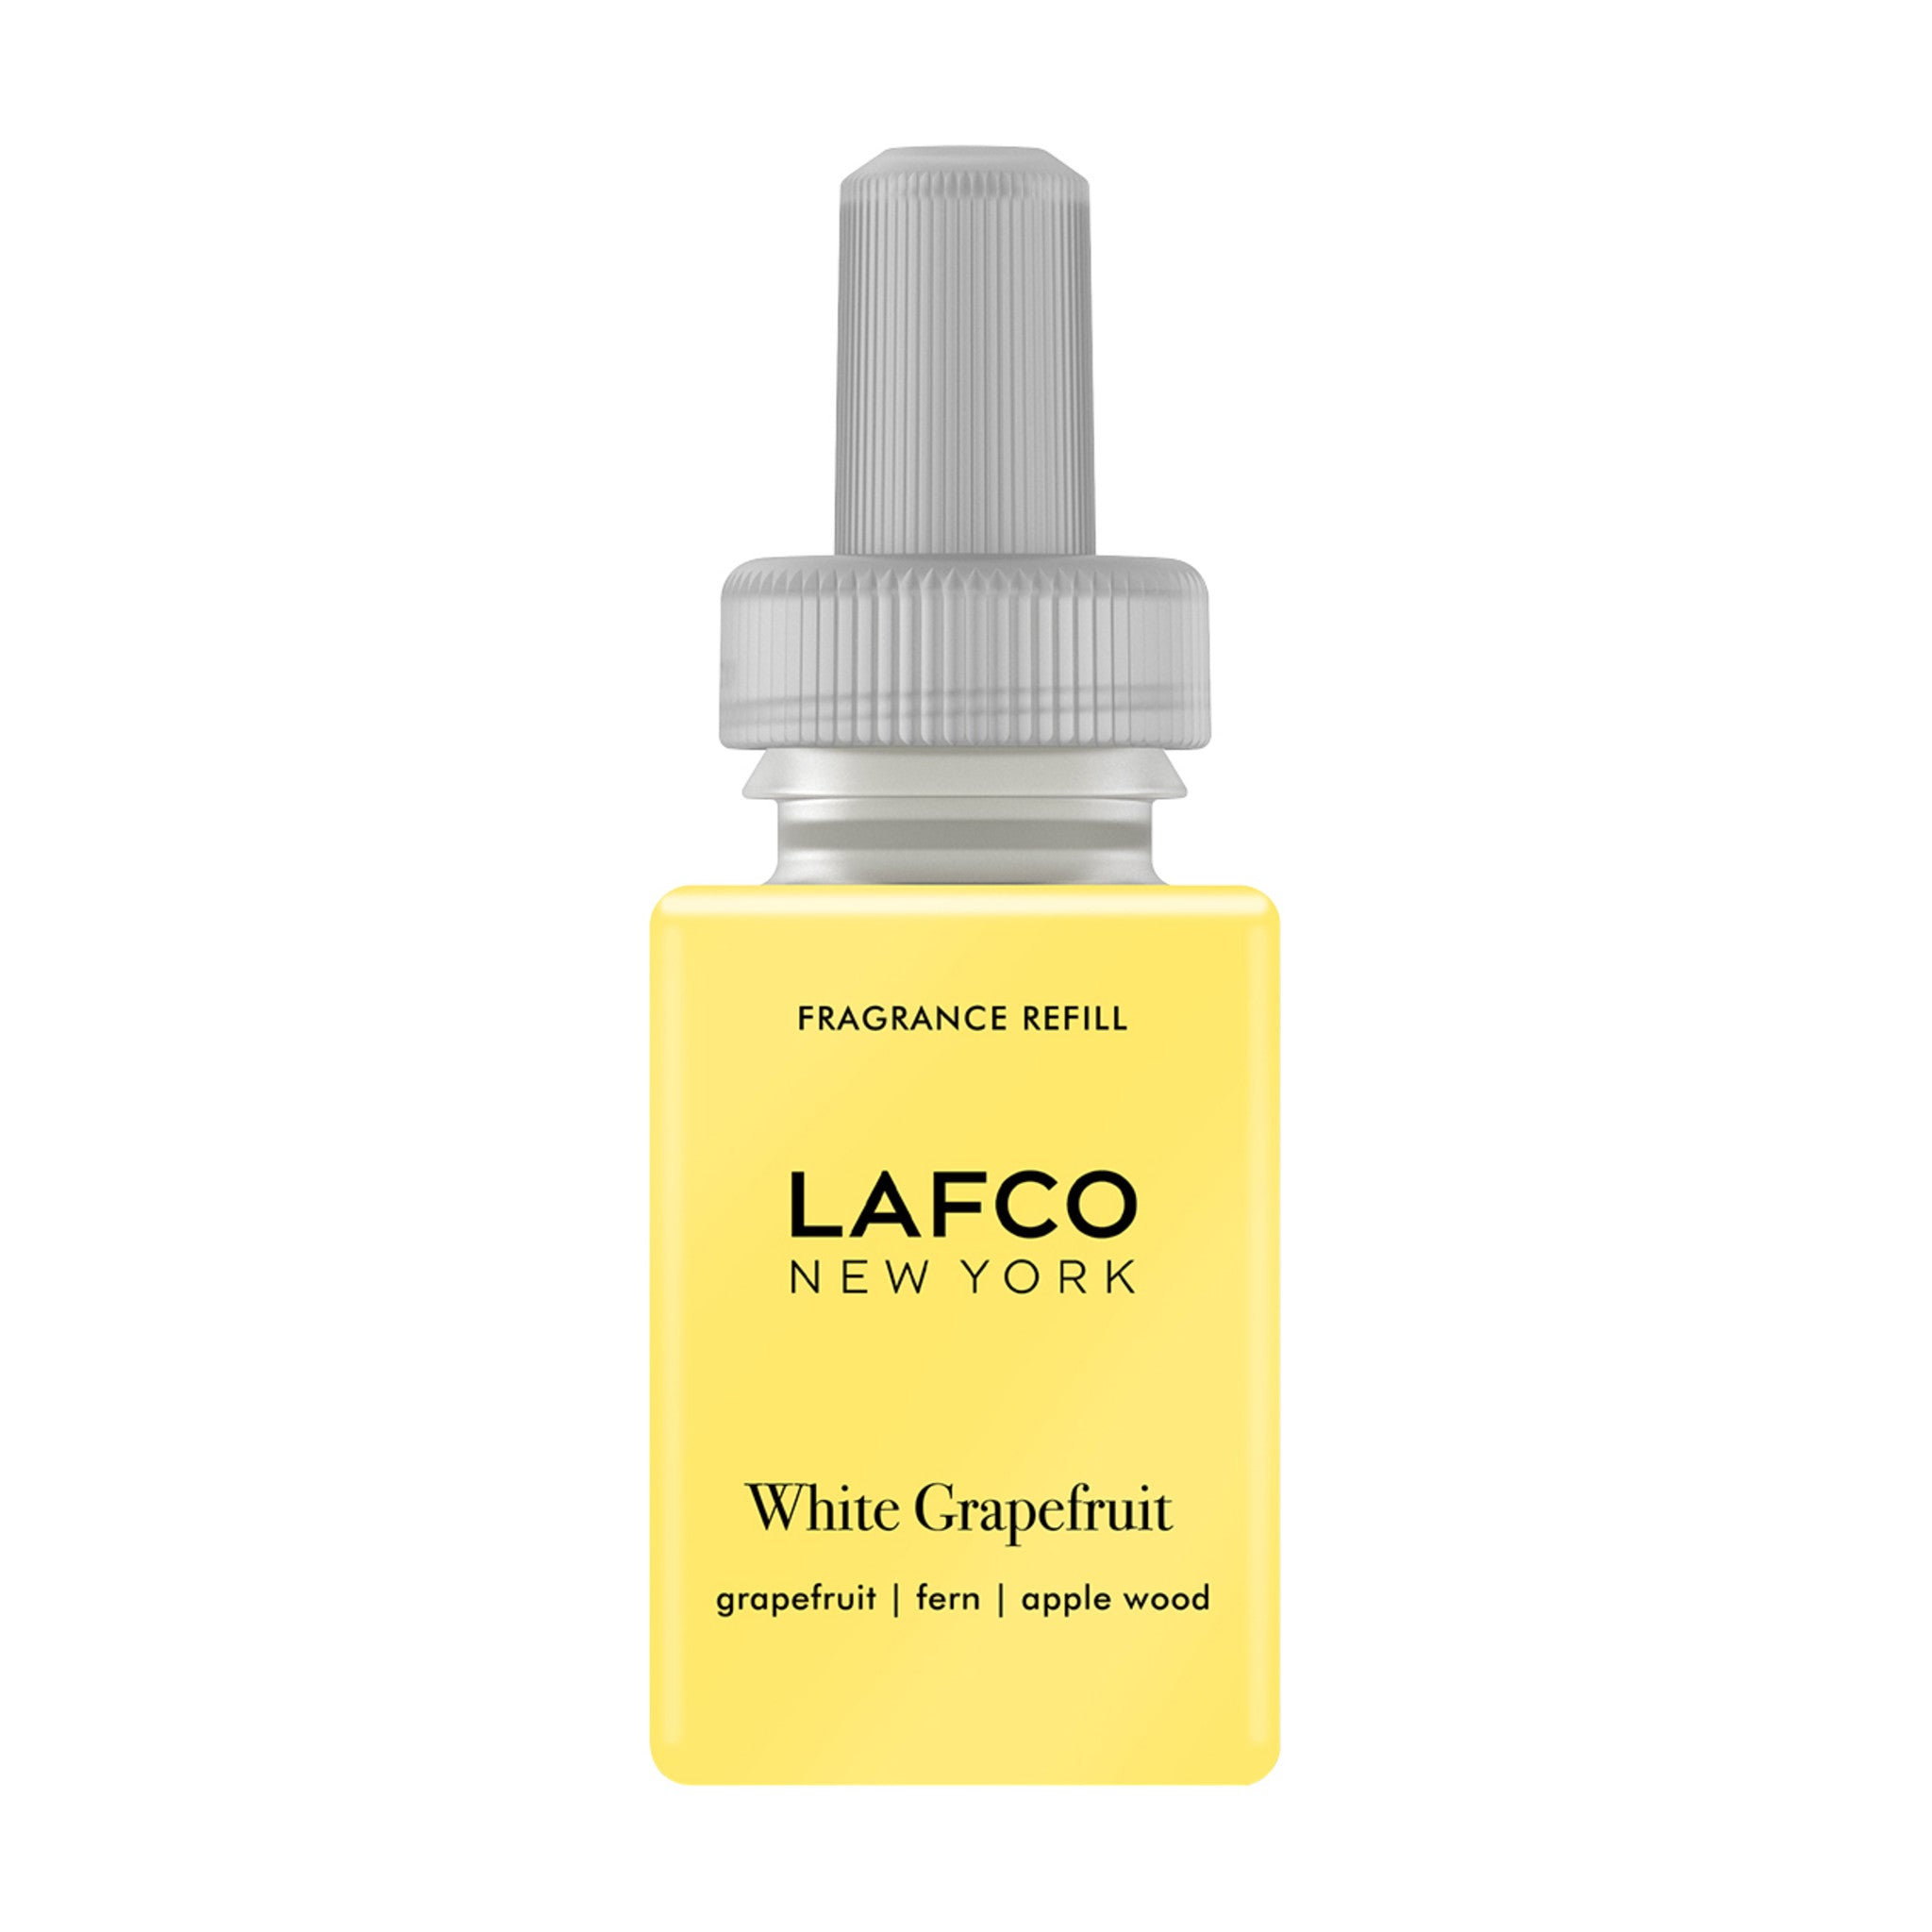 Lafco White Grapefruit Pura Smart Home Fragrance Refill main image.